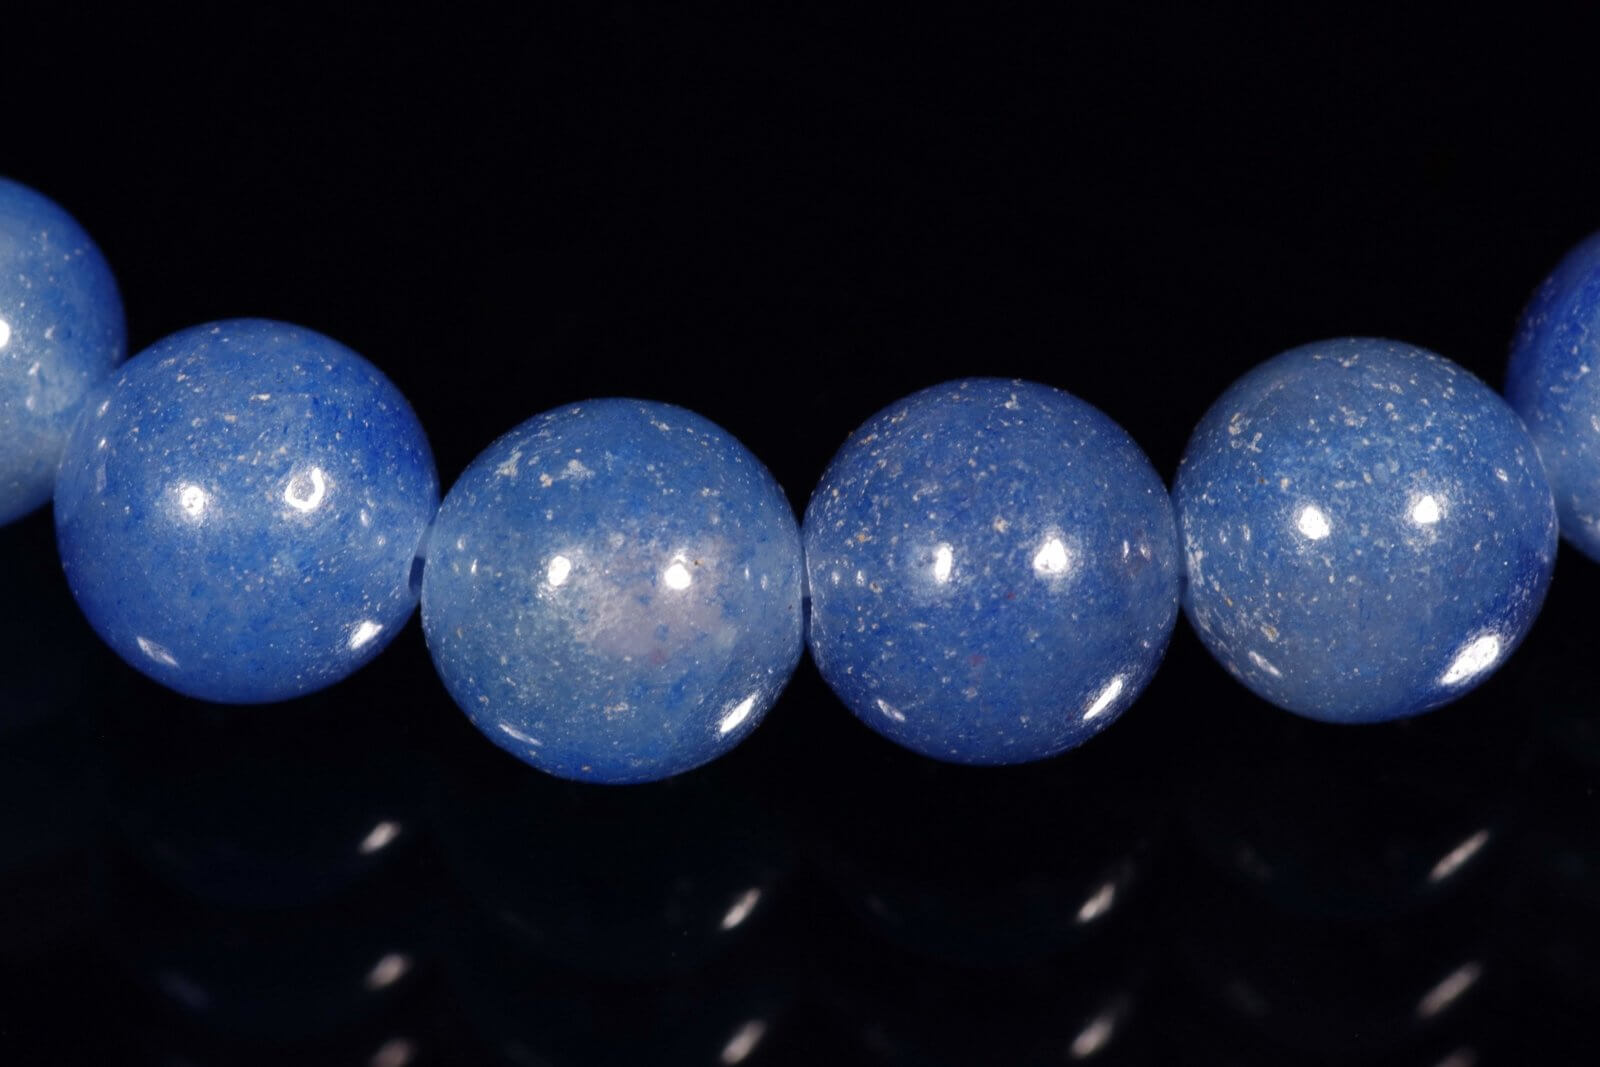 Mėlynas kvarcas apyrankė – 6mm - www.Kristalai.eu